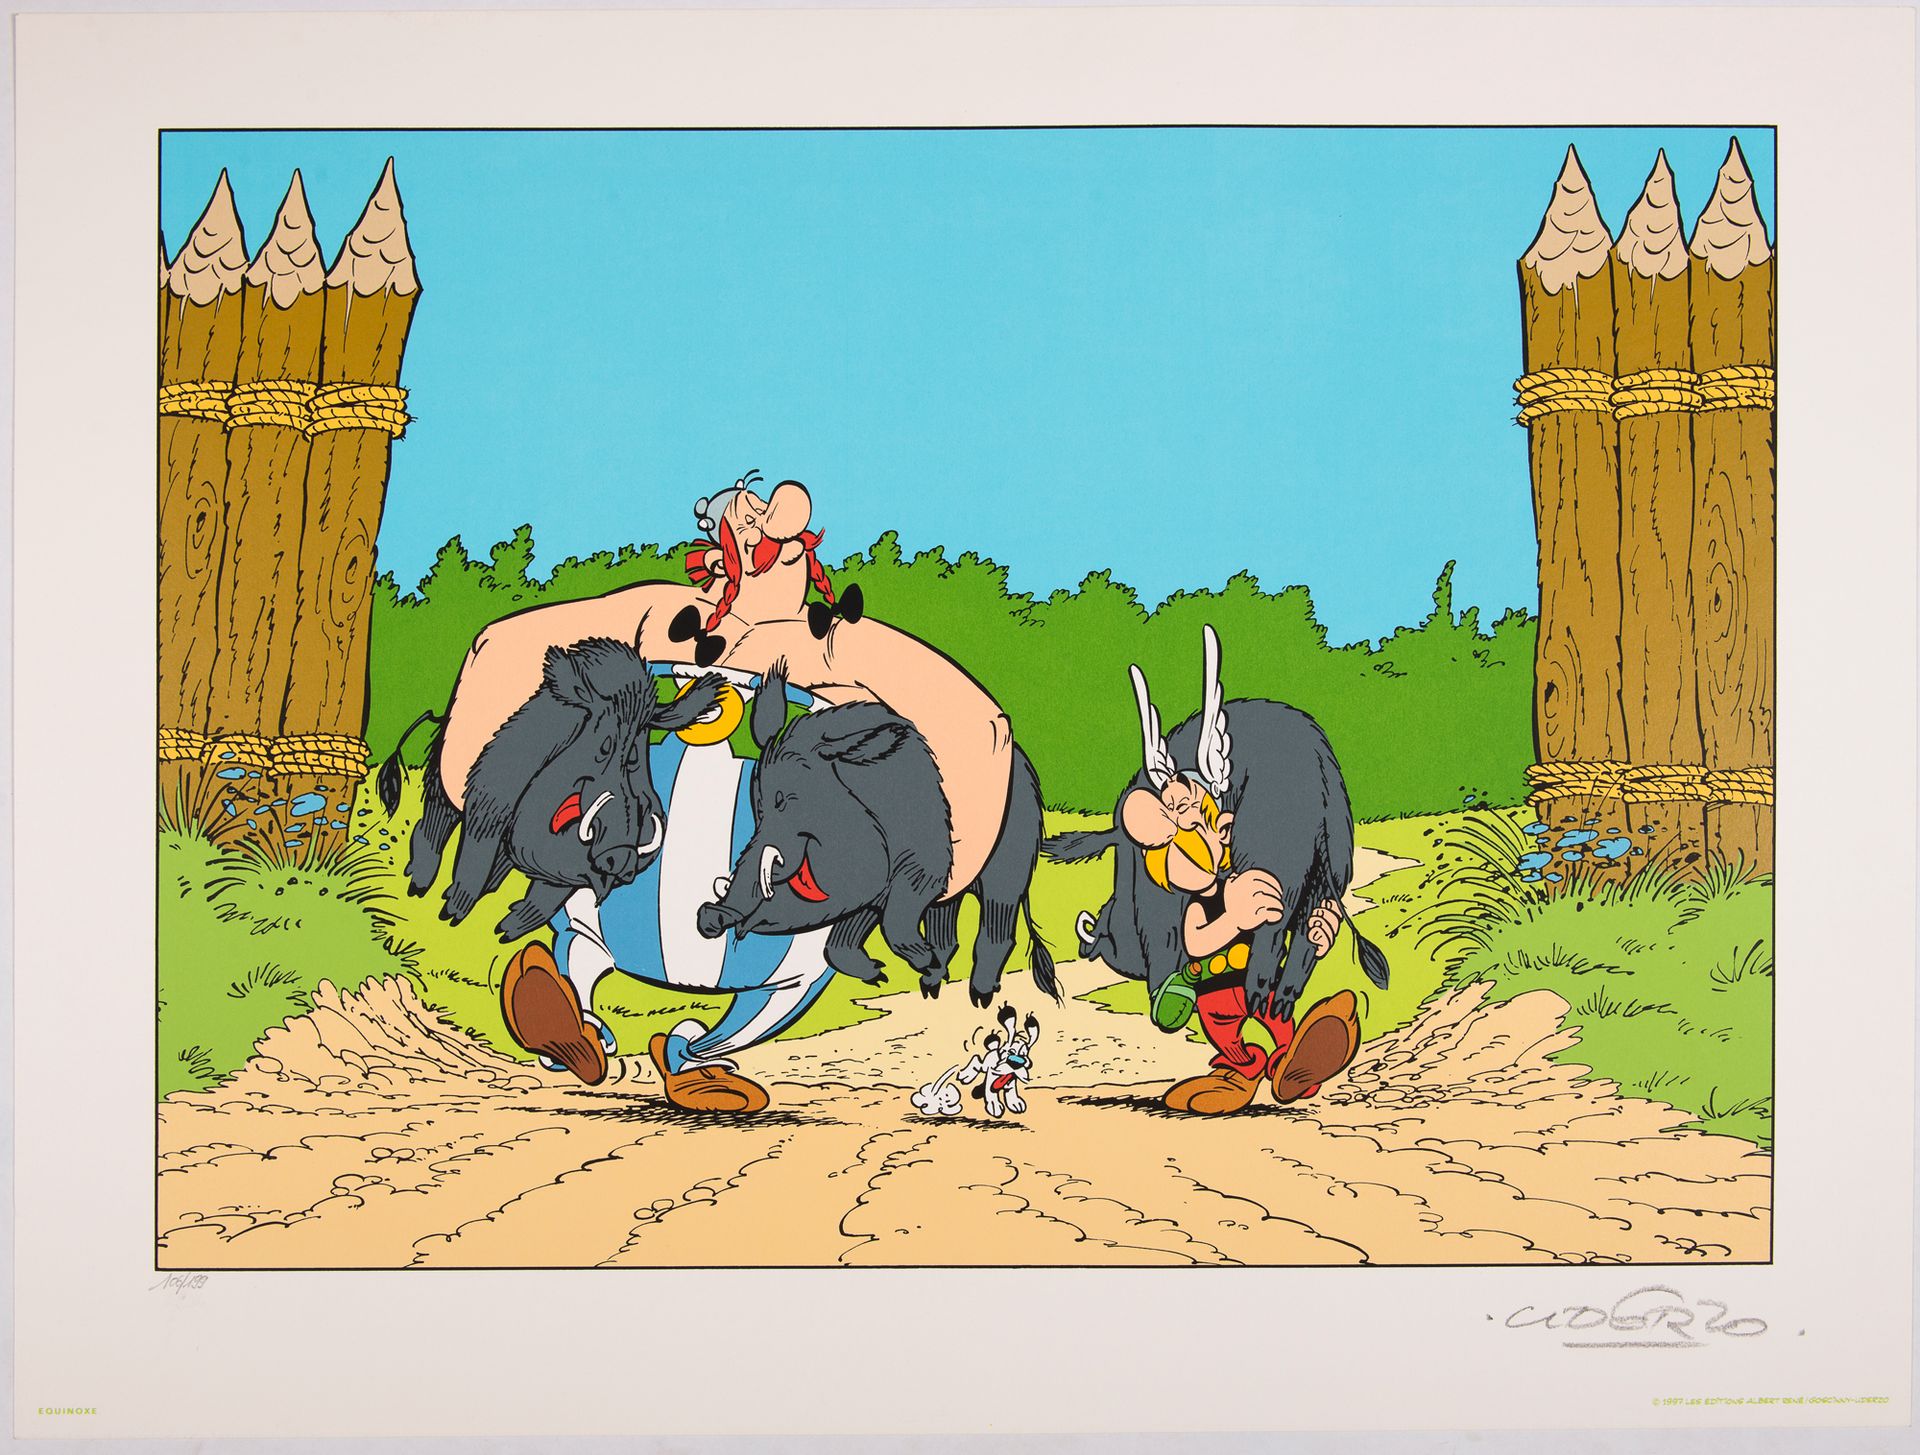 UDERZO Silkscreen print : Asterix, Obelix and the boars. Magnificent large serig&hellip;